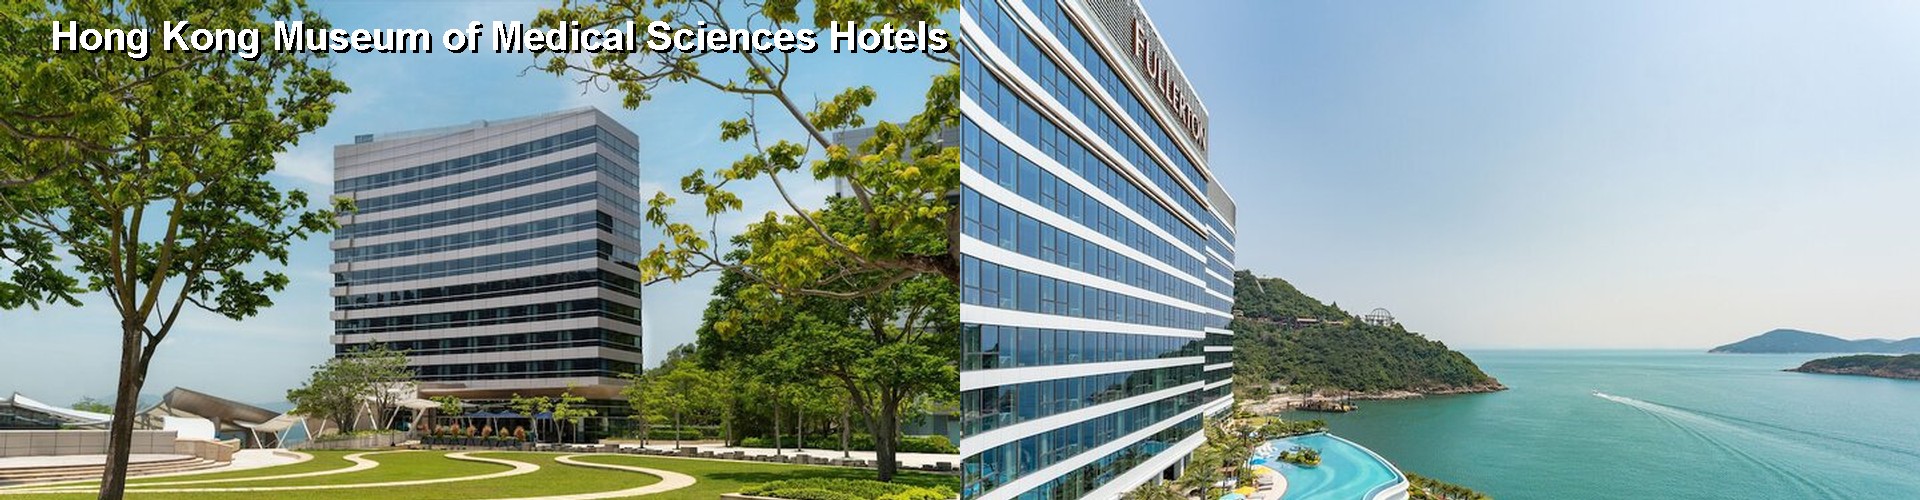 5 Best Hotels near Hong Kong Museum of Medical Sciences